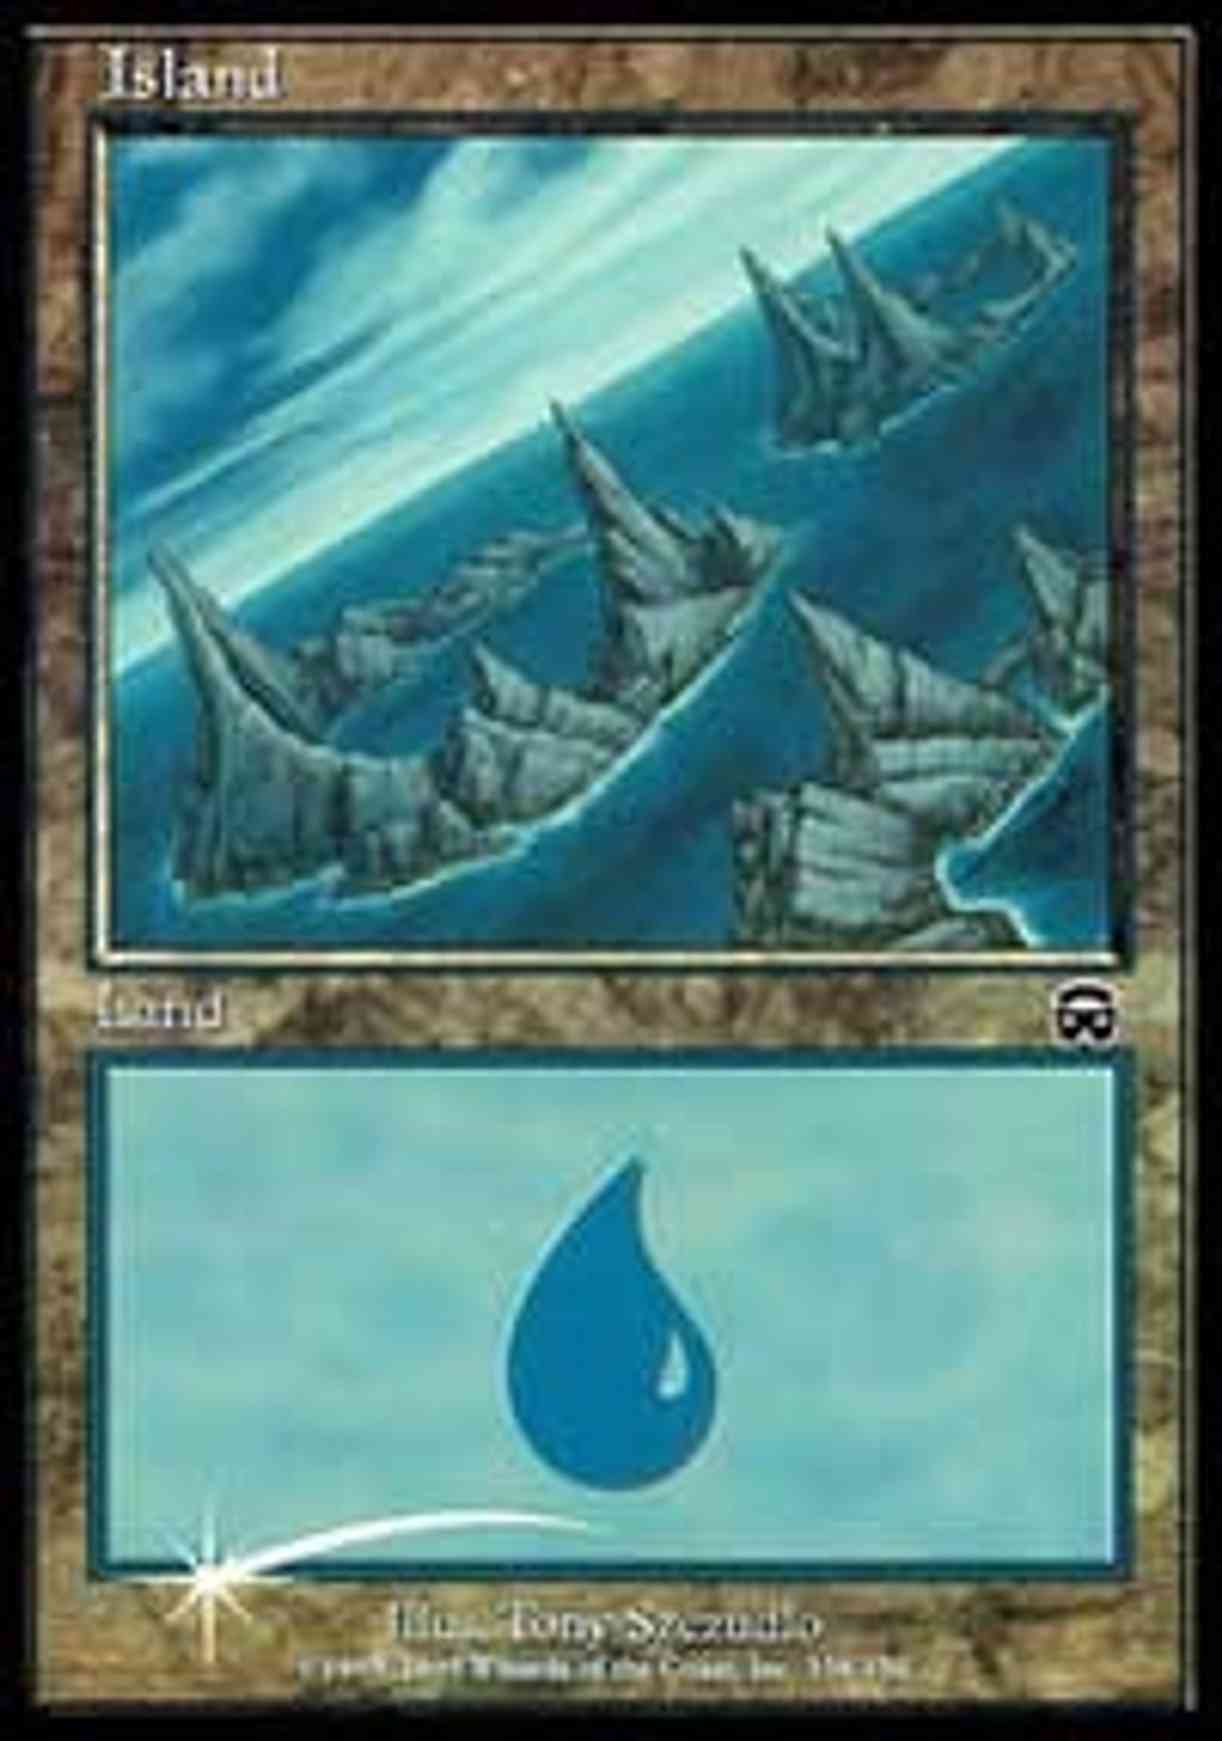 Island (2000) magic card front